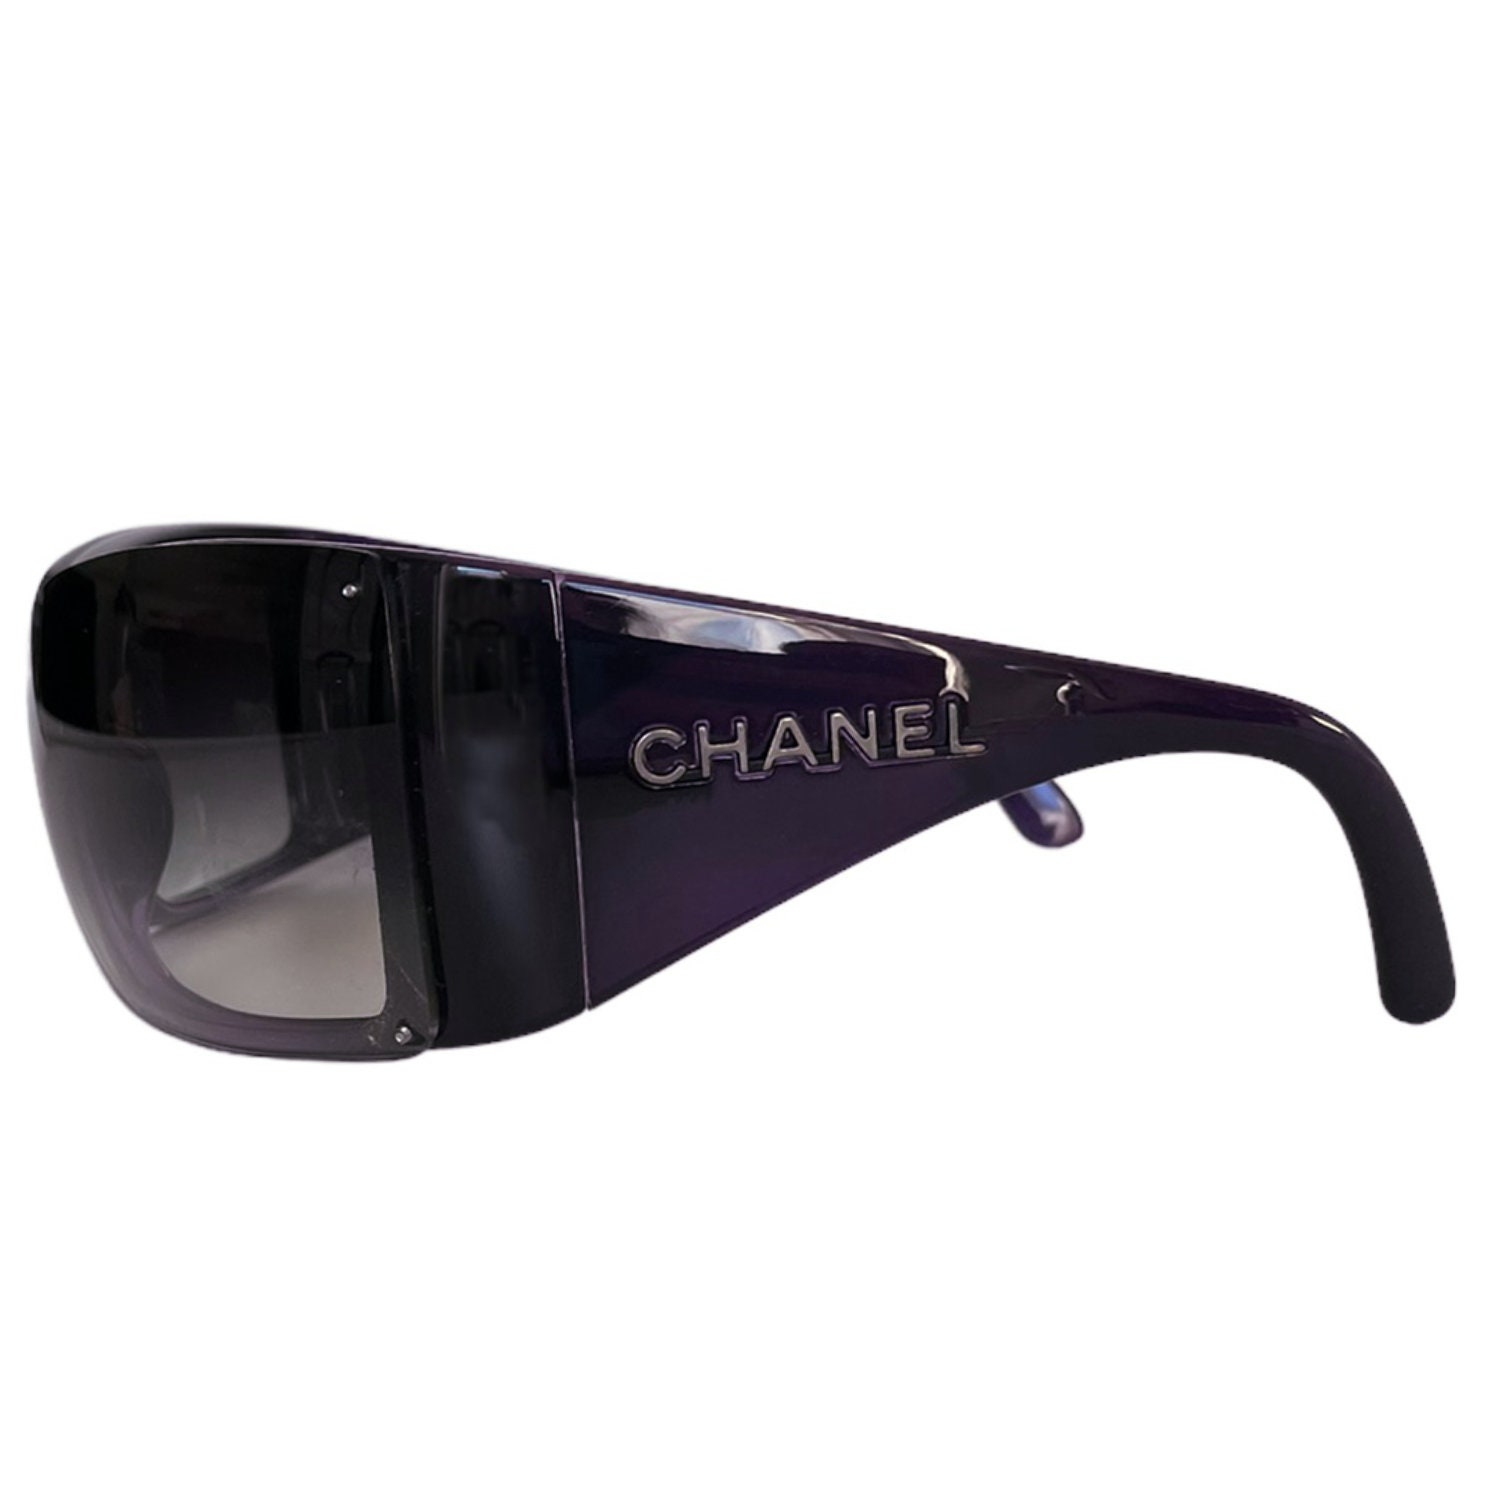 Shop CHANEL Unisex Round Eyeglasses by cocofashion